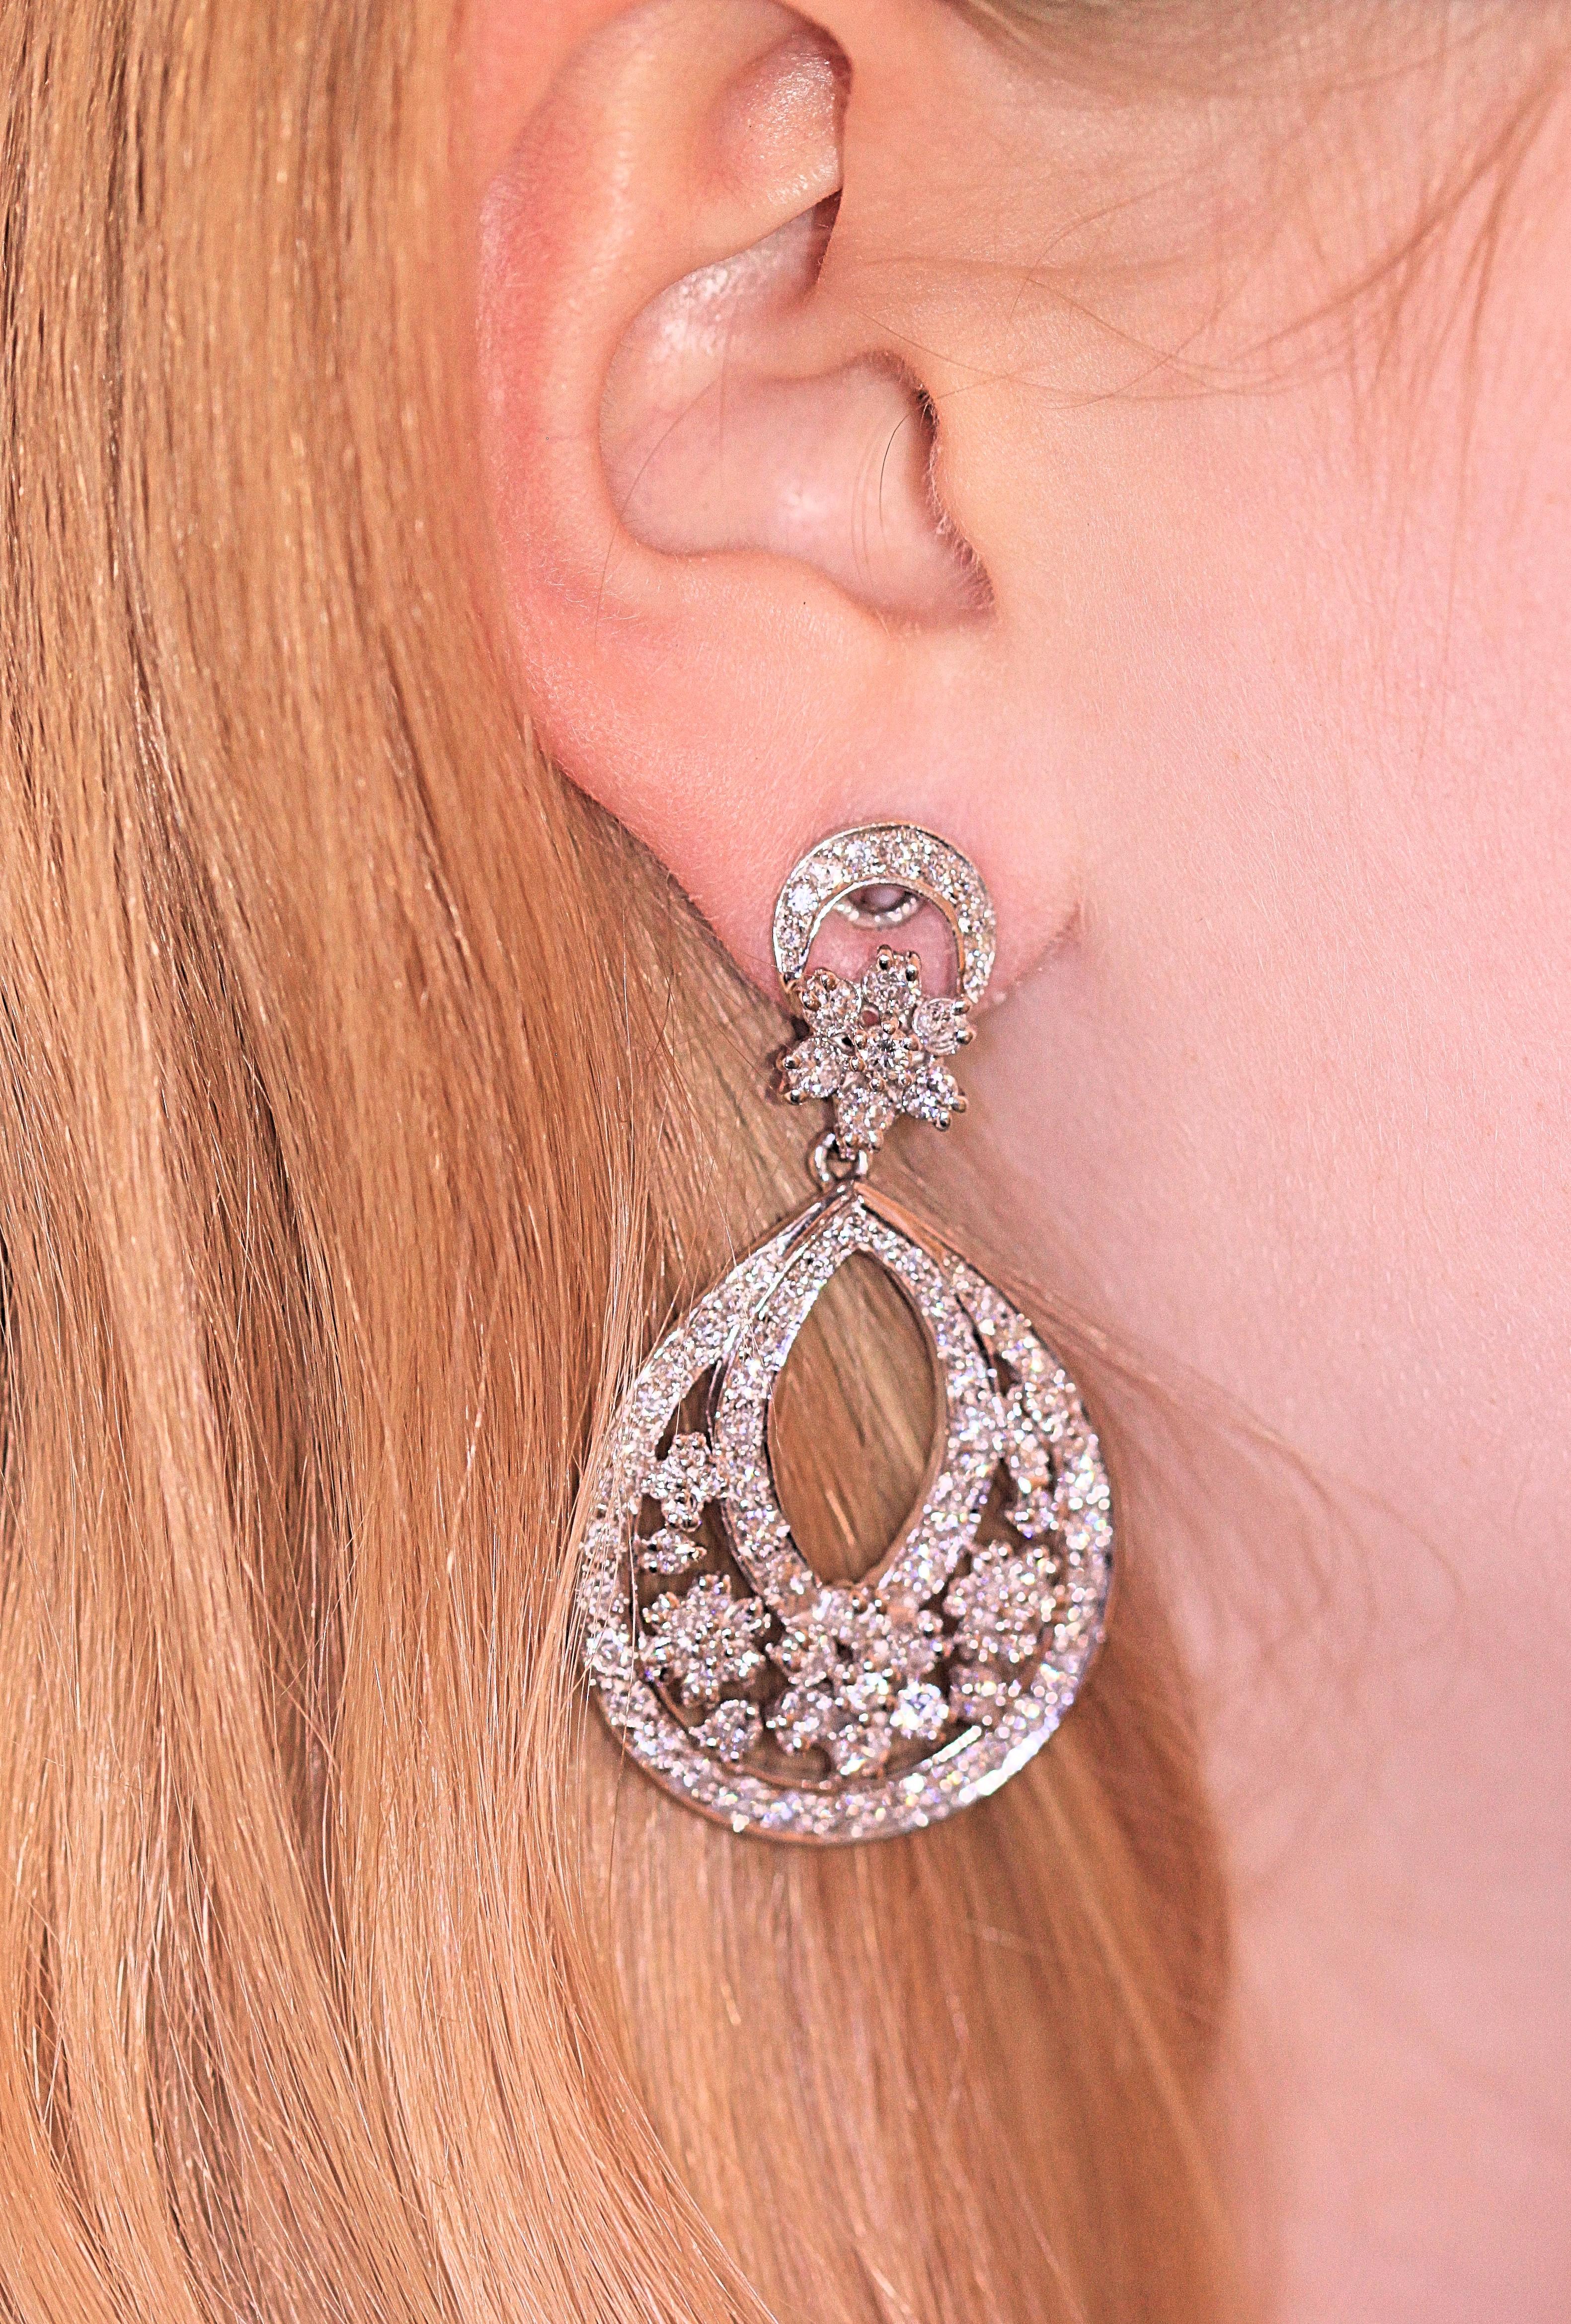 Chandelier Diamond Earrings 18 Karat White Gold 2